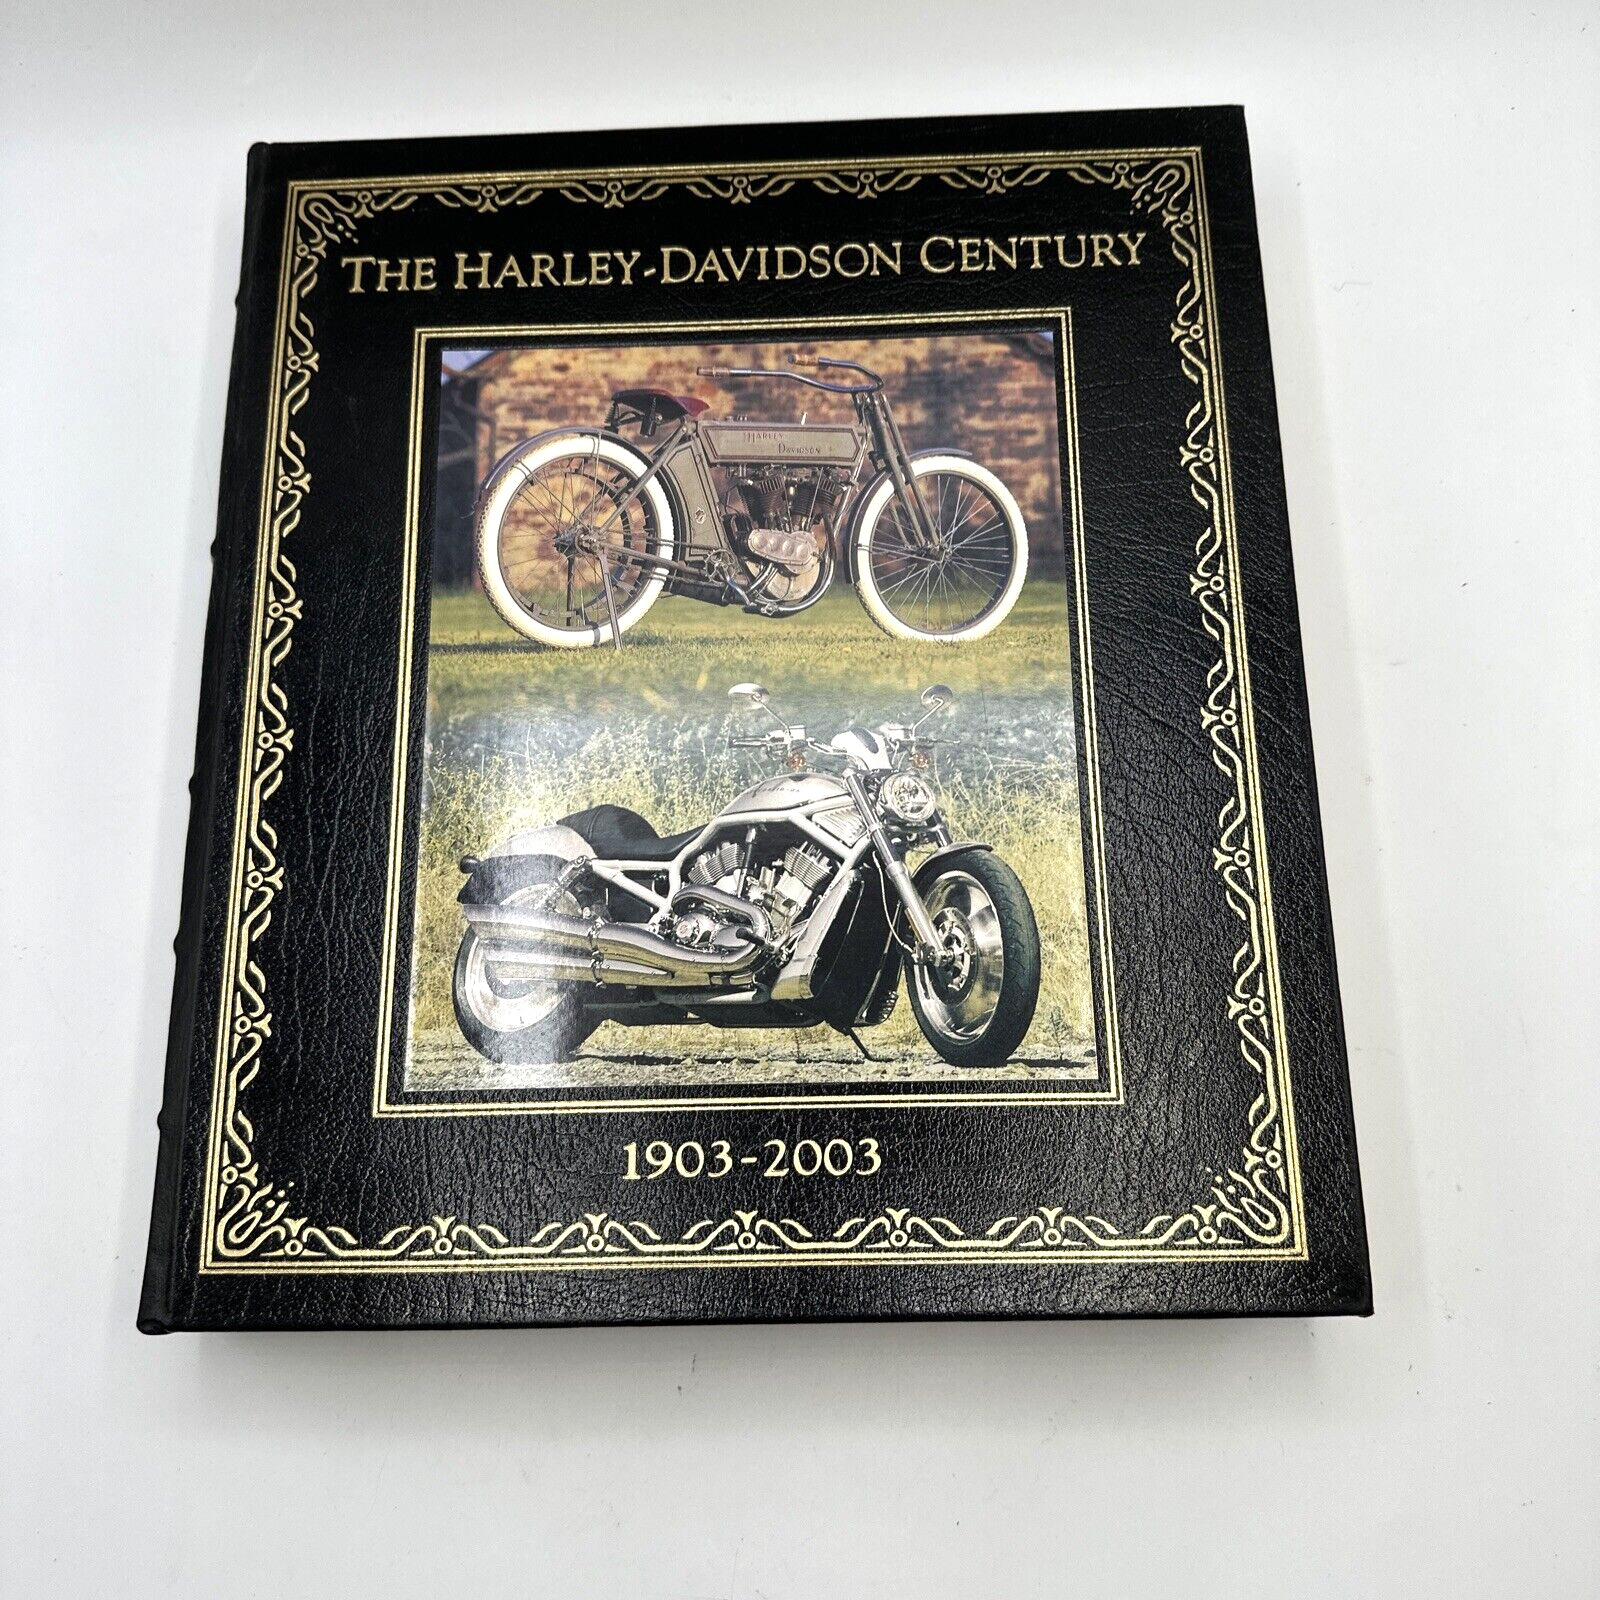 The Harley Davidson Davidson century 1903 to 2003 Photo Collectible Book